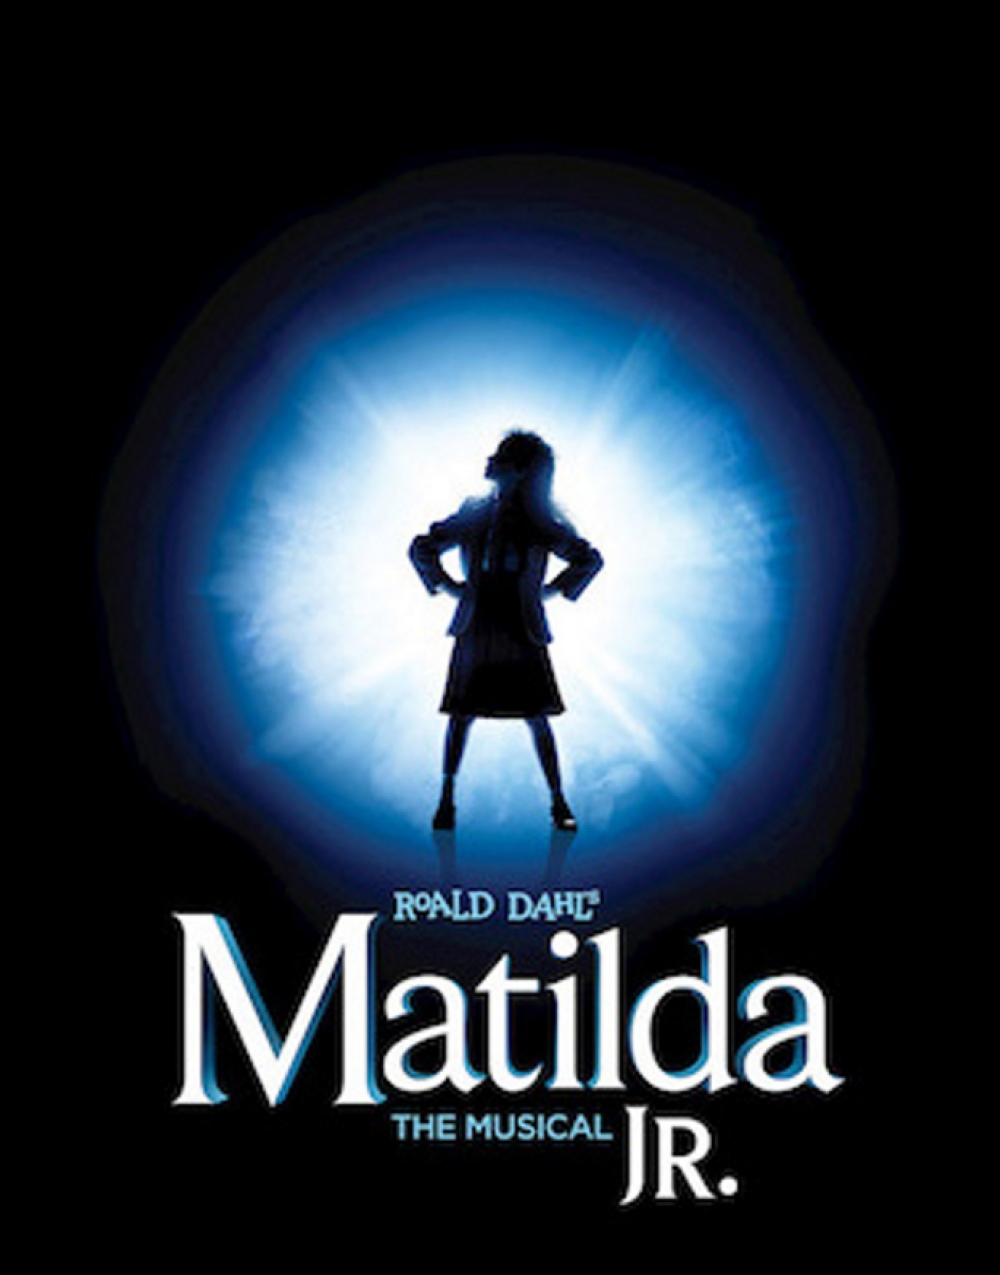 Roald Dahl's Matilda The Musical JR. at Zane Trace Theater